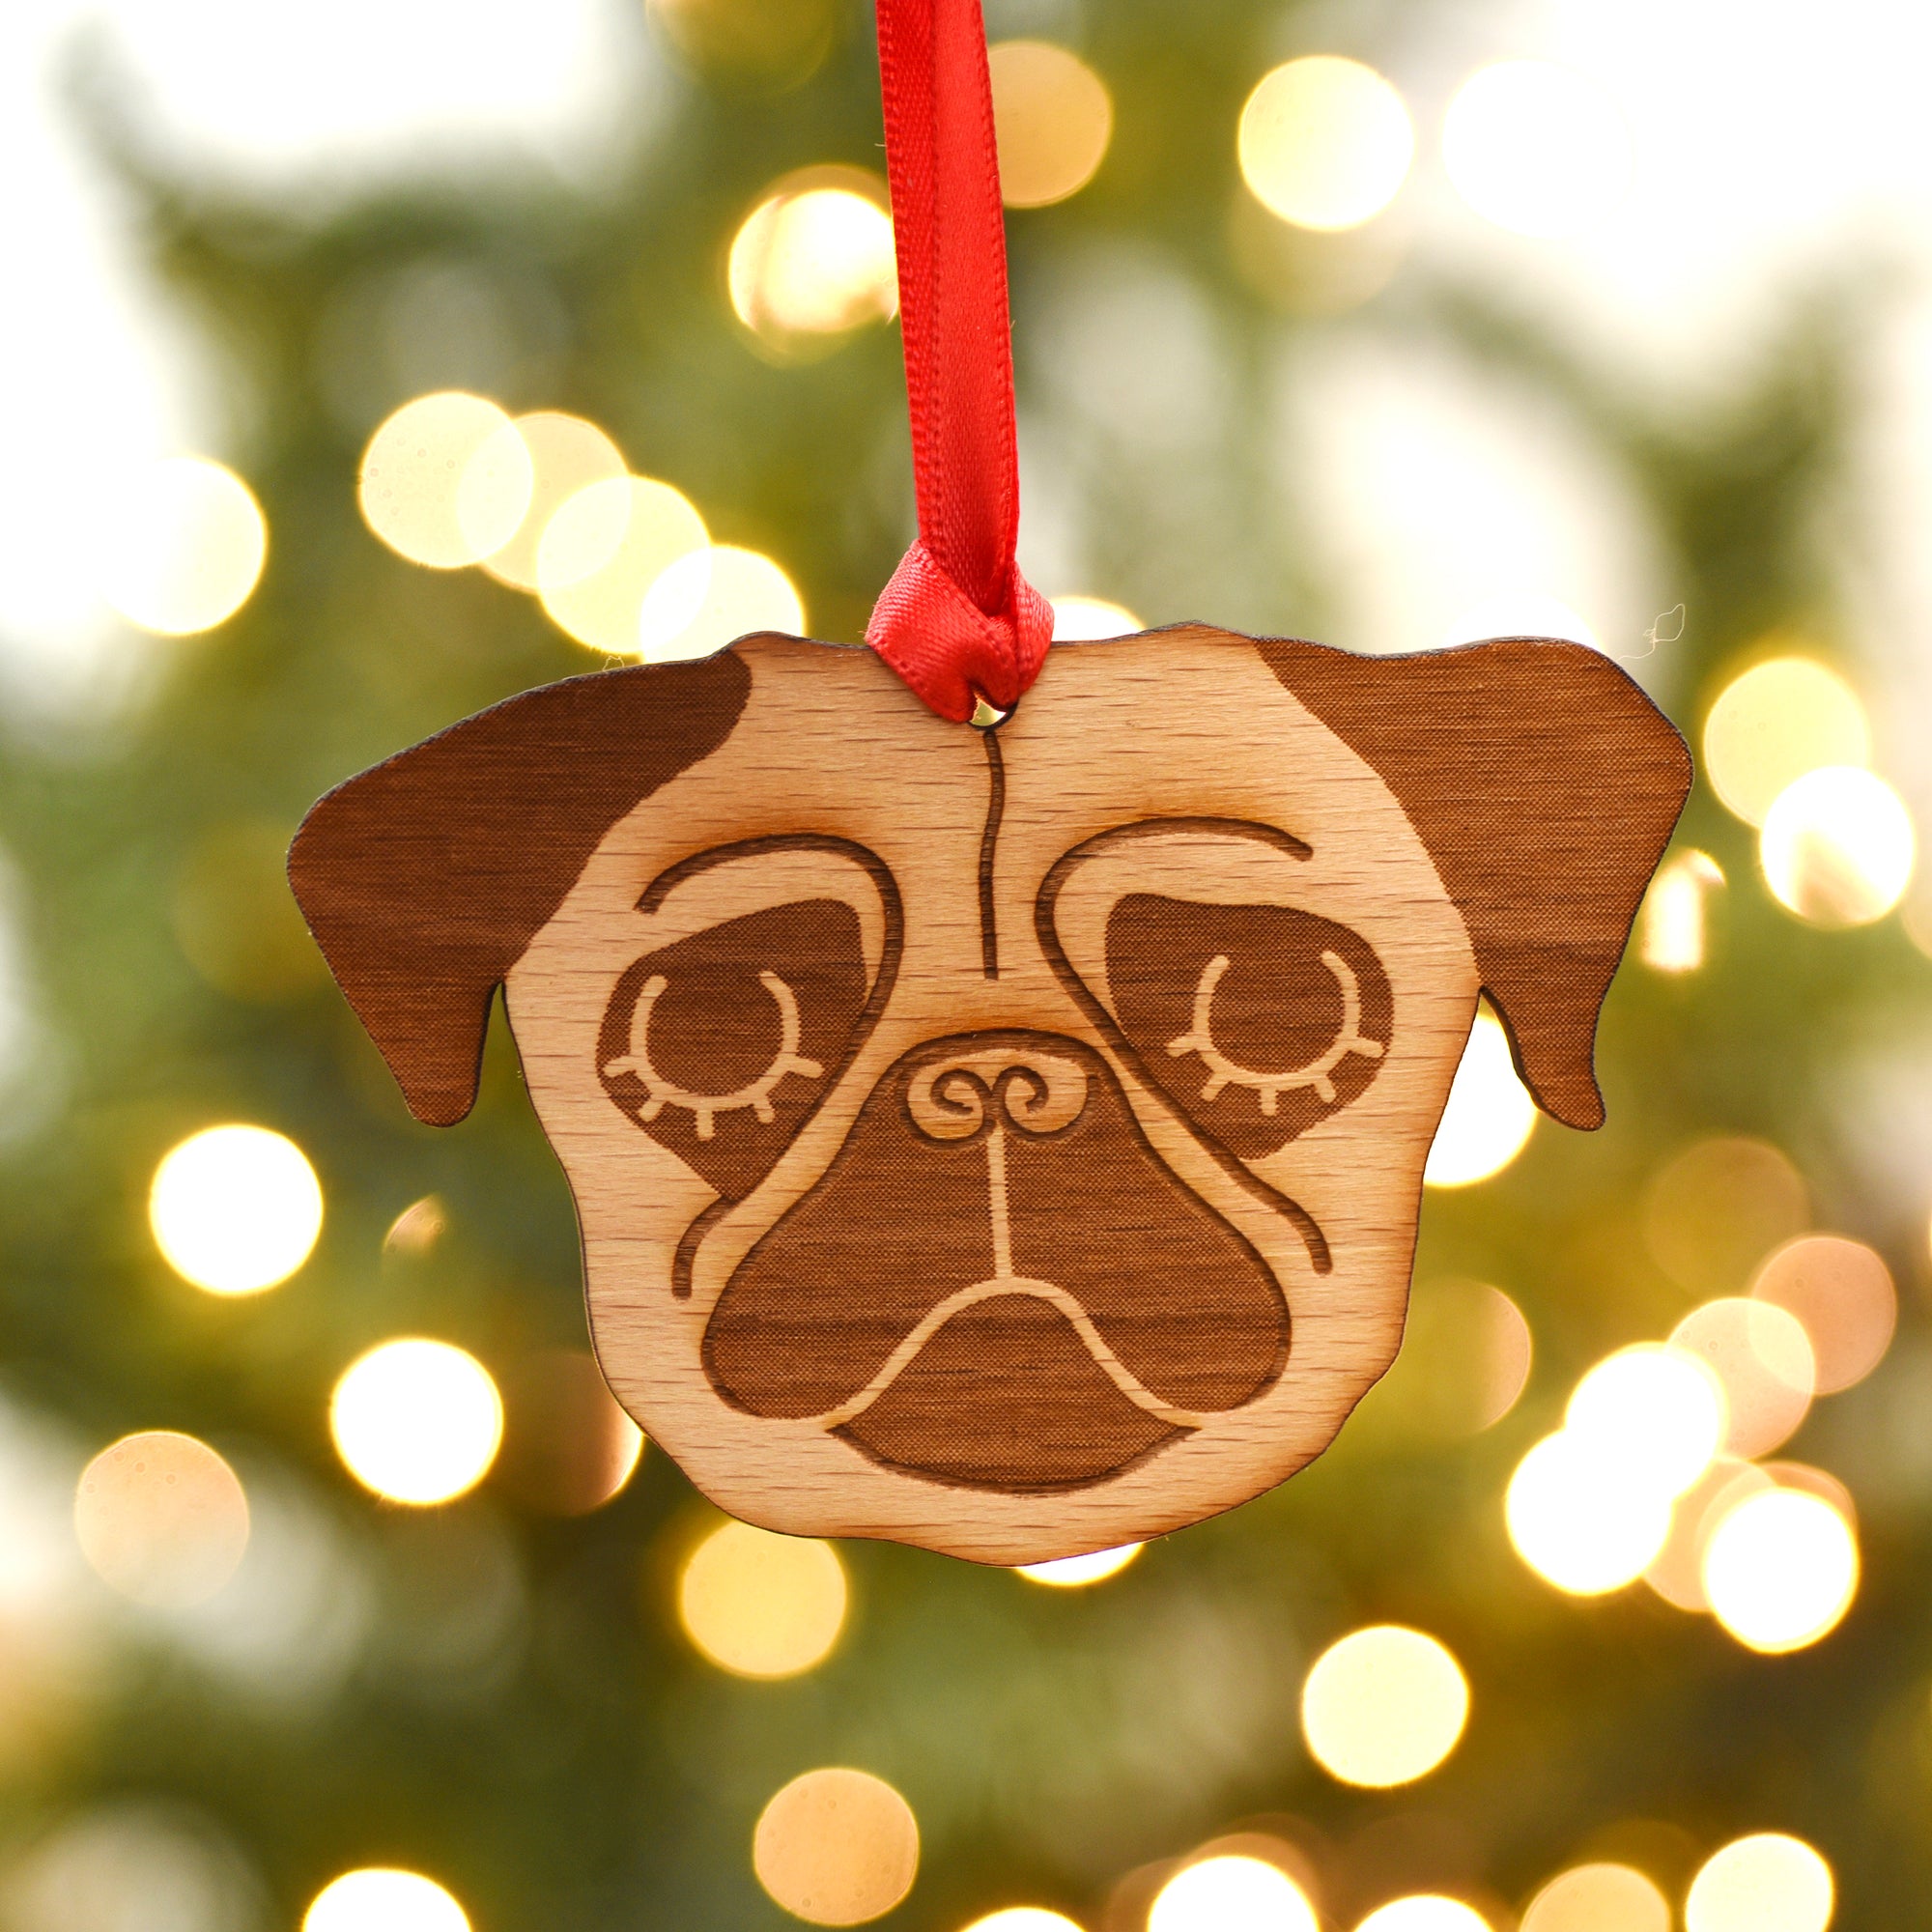 Wooden Pug Christmas Ornament